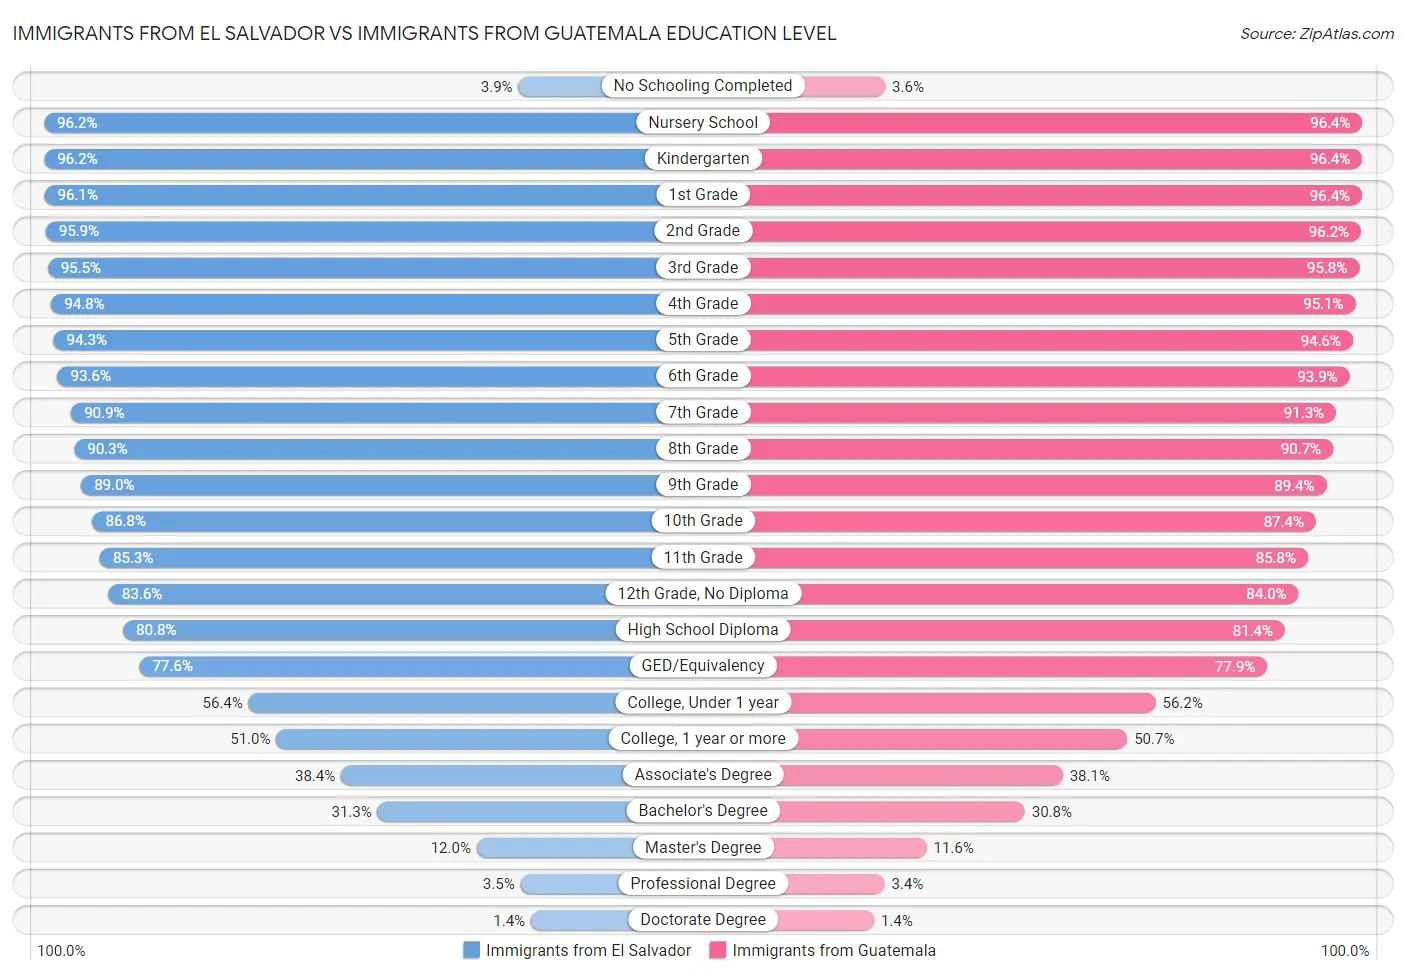 Immigrants from El Salvador vs Immigrants from Guatemala Education Level